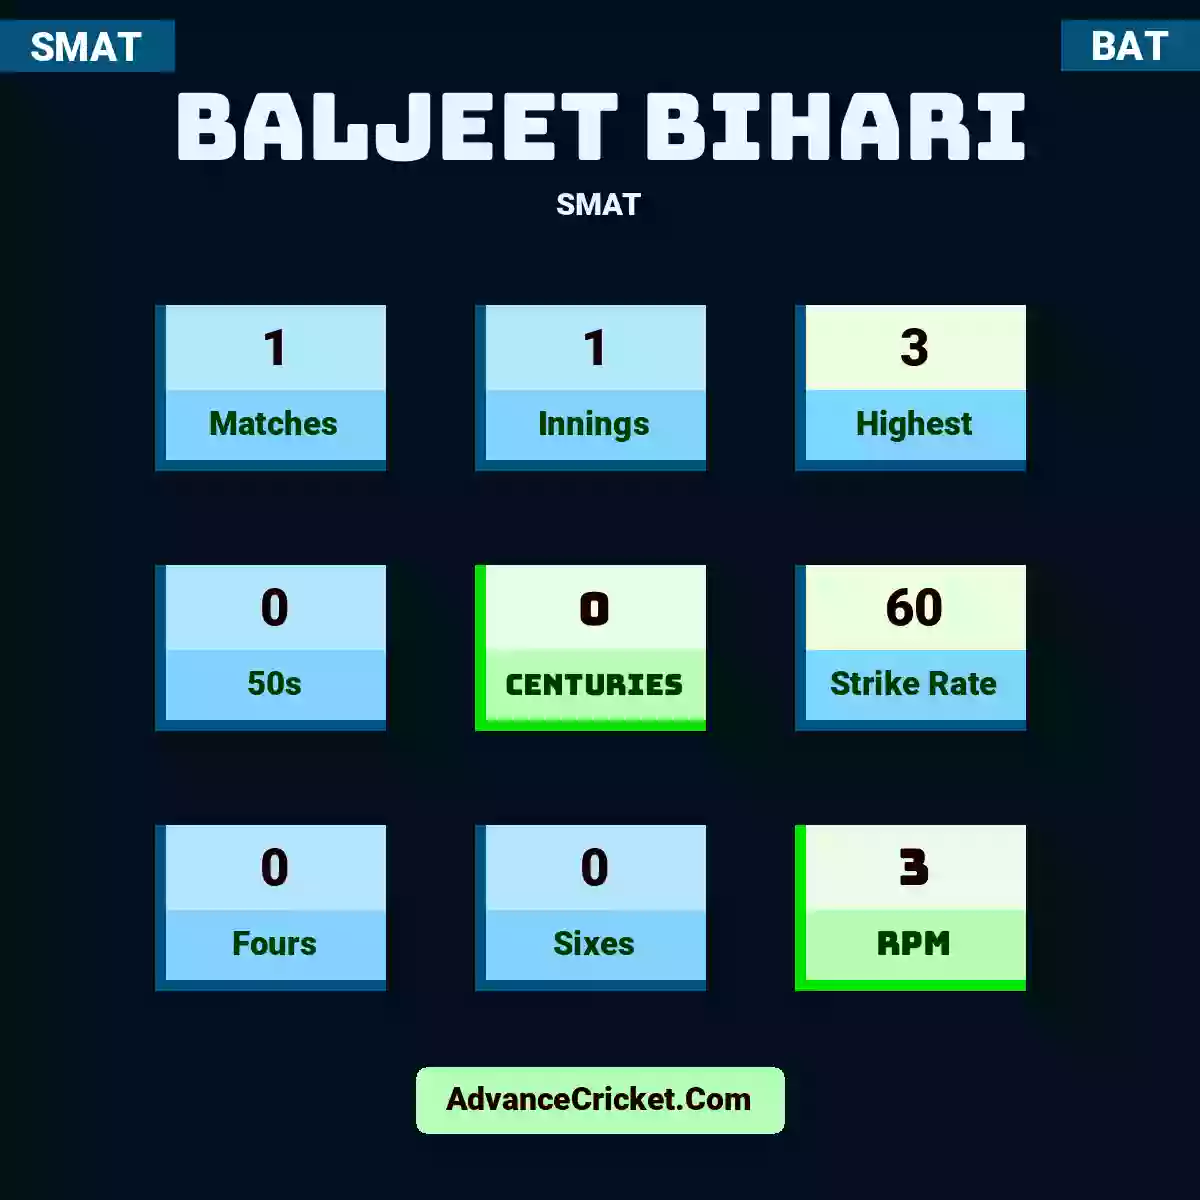 Baljeet Bihari SMAT , Baljeet Bihari played 1 matches, scored 3 runs as highest, 0 half-centuries, and 0 centuries, with a strike rate of 60. B.Bihari hit 0 fours and 0 sixes, with an RPM of 3.